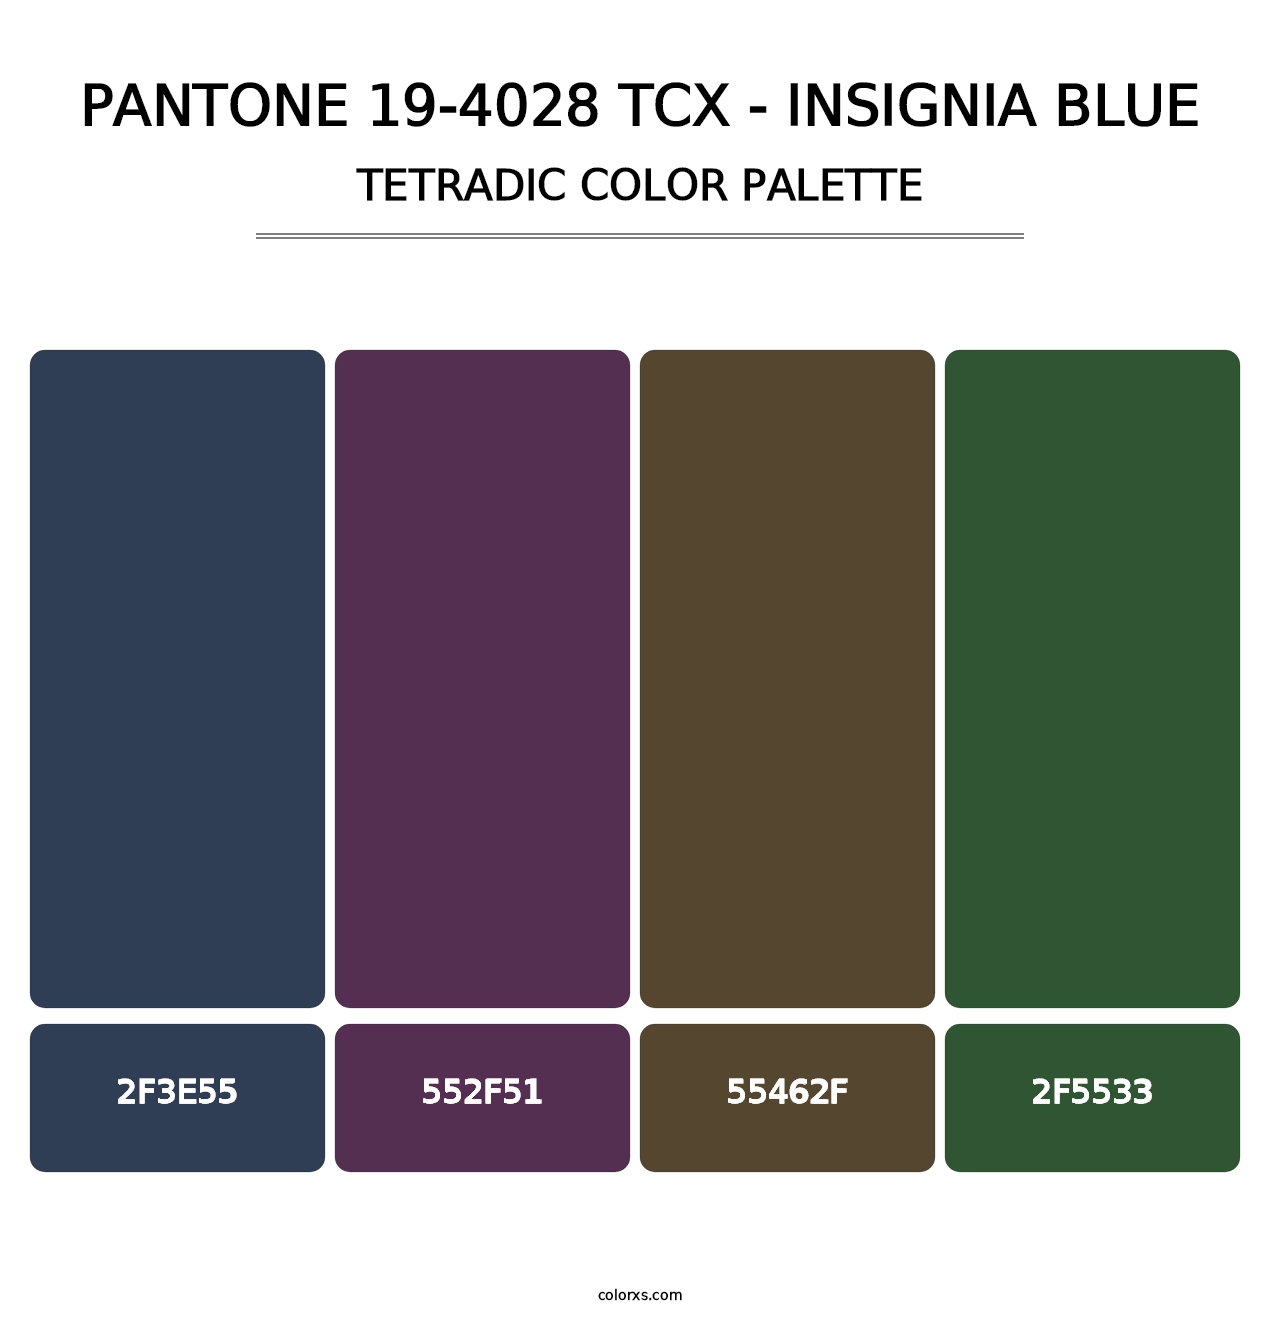 PANTONE 19-4028 TCX - Insignia Blue - Tetradic Color Palette